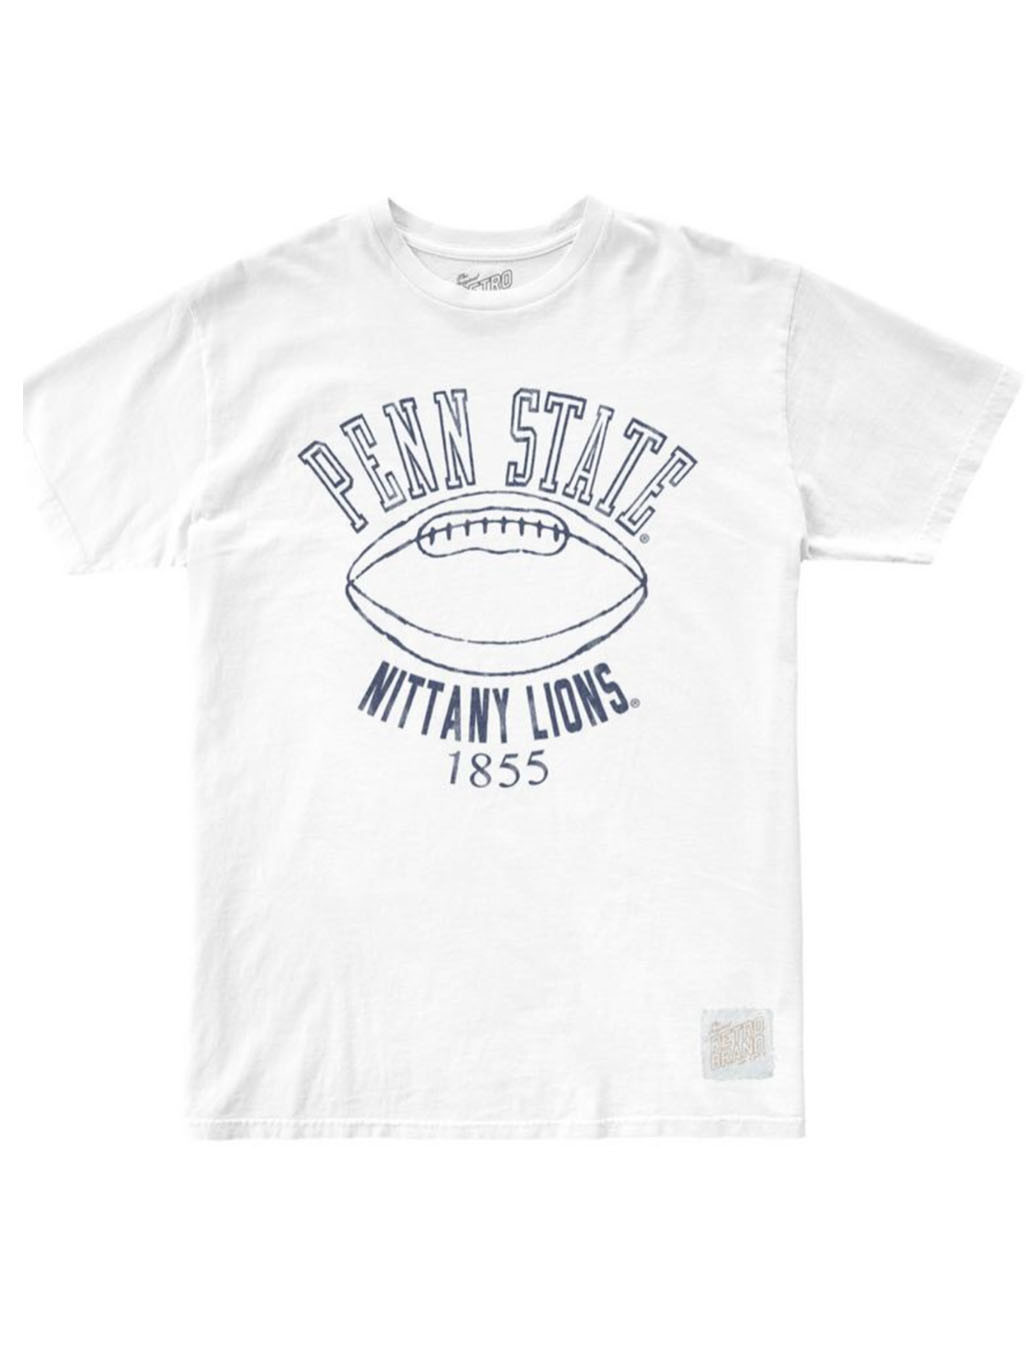 White Penn State Football T-Shirt Retro Brand